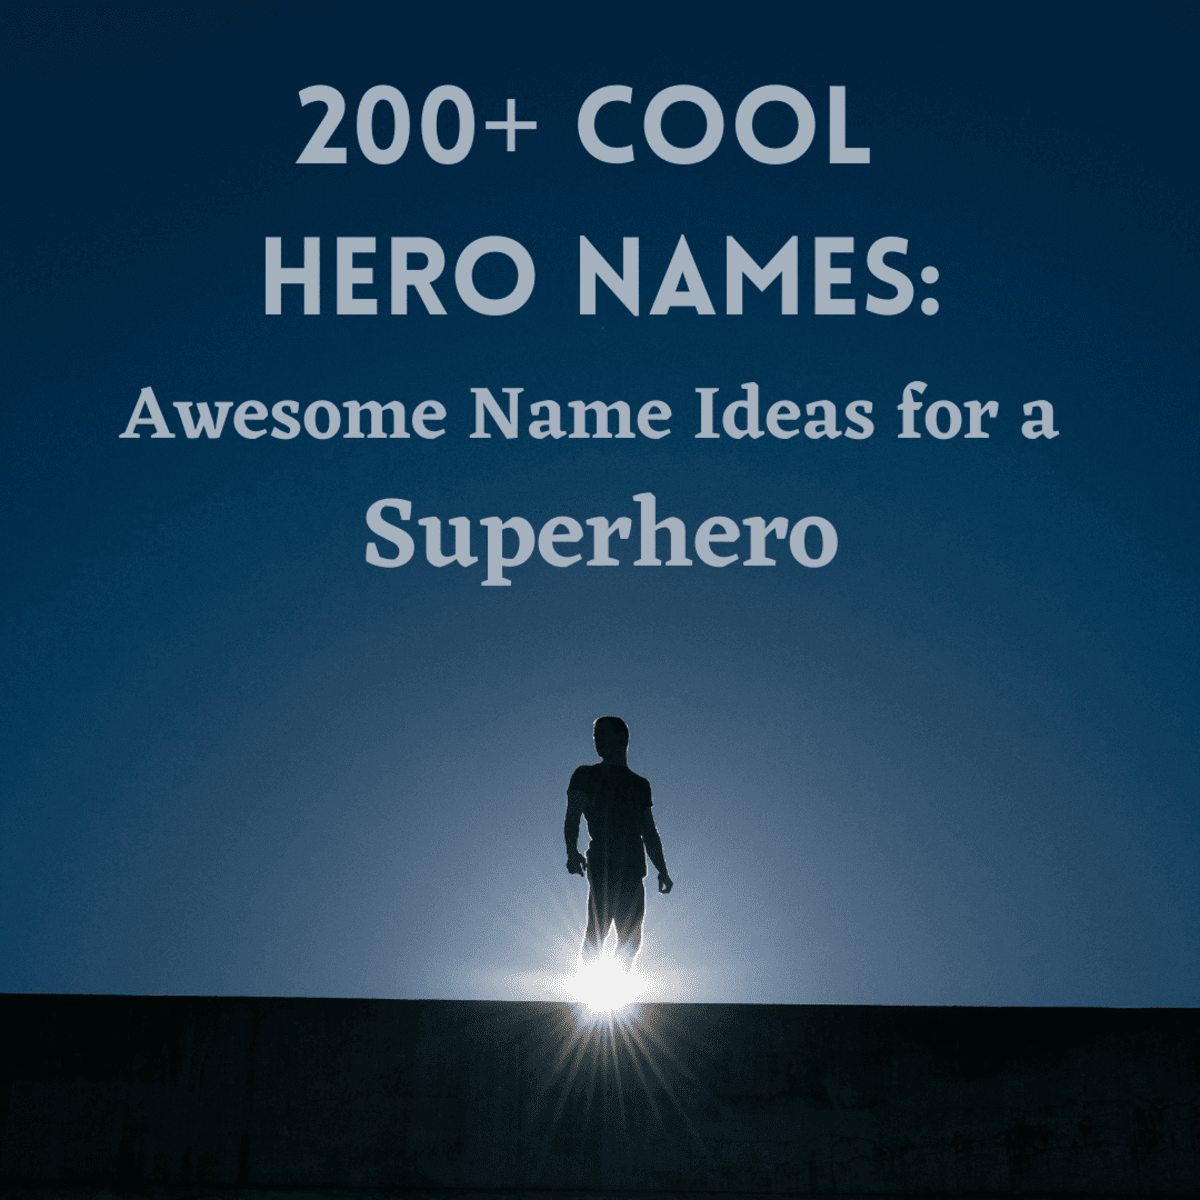 Awesome Name Ideas for Superheroes - HobbyLark